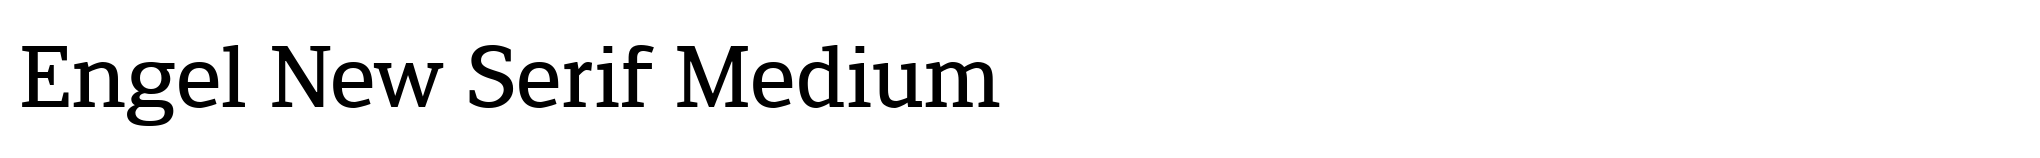 Engel New Serif Medium image